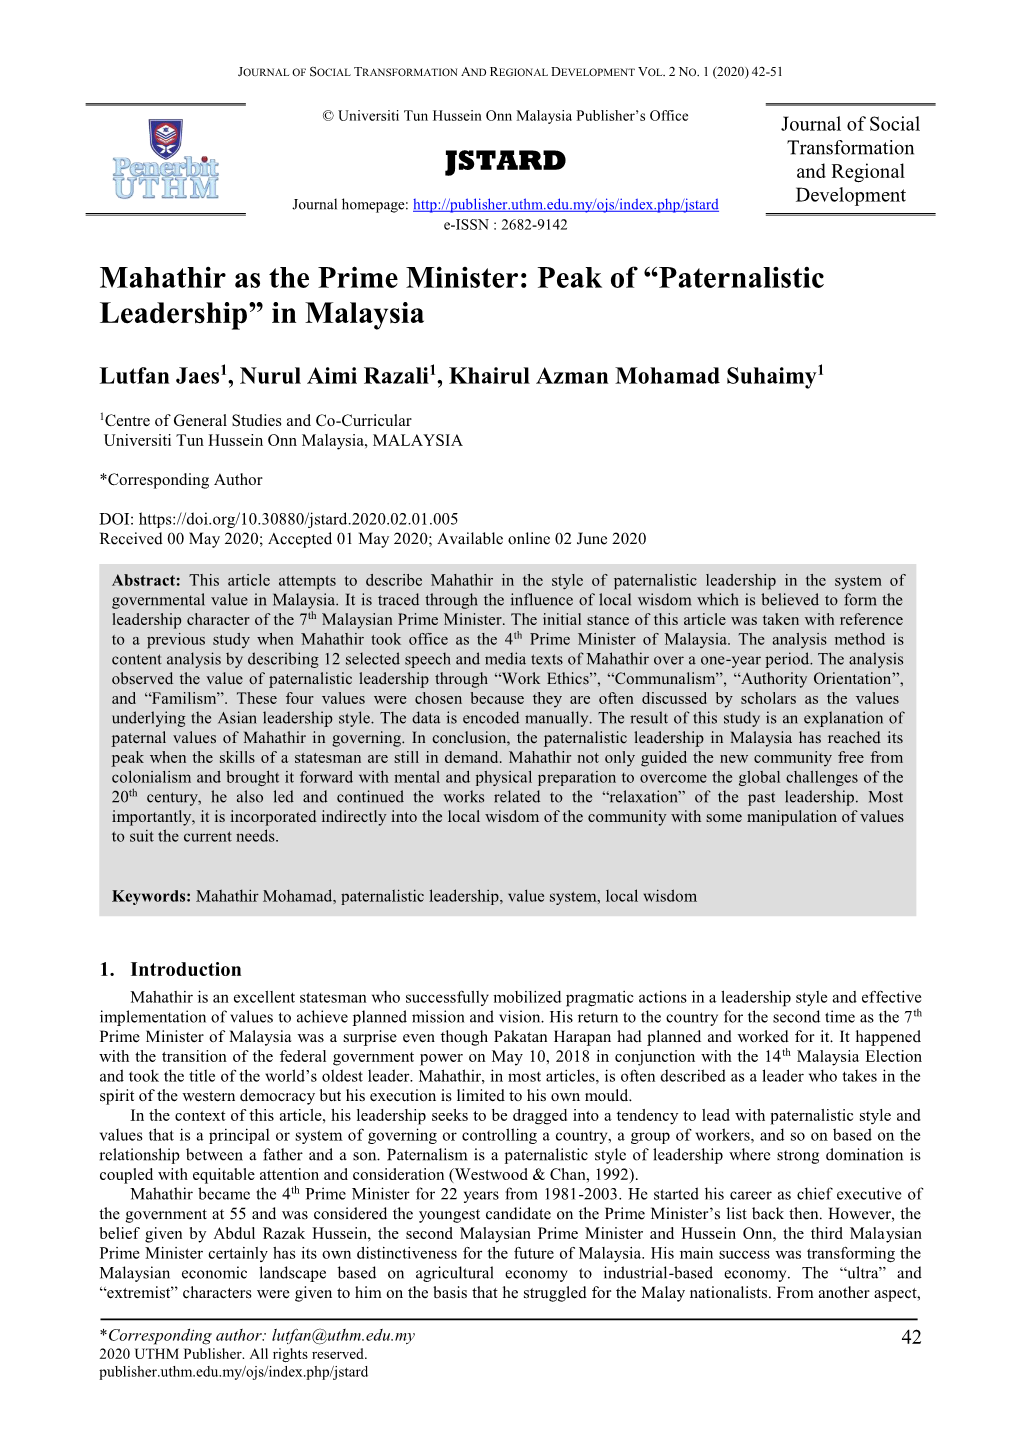 Mahathir As the Prime Minister: Peak of “Paternalistic Leadership” in Malaysia